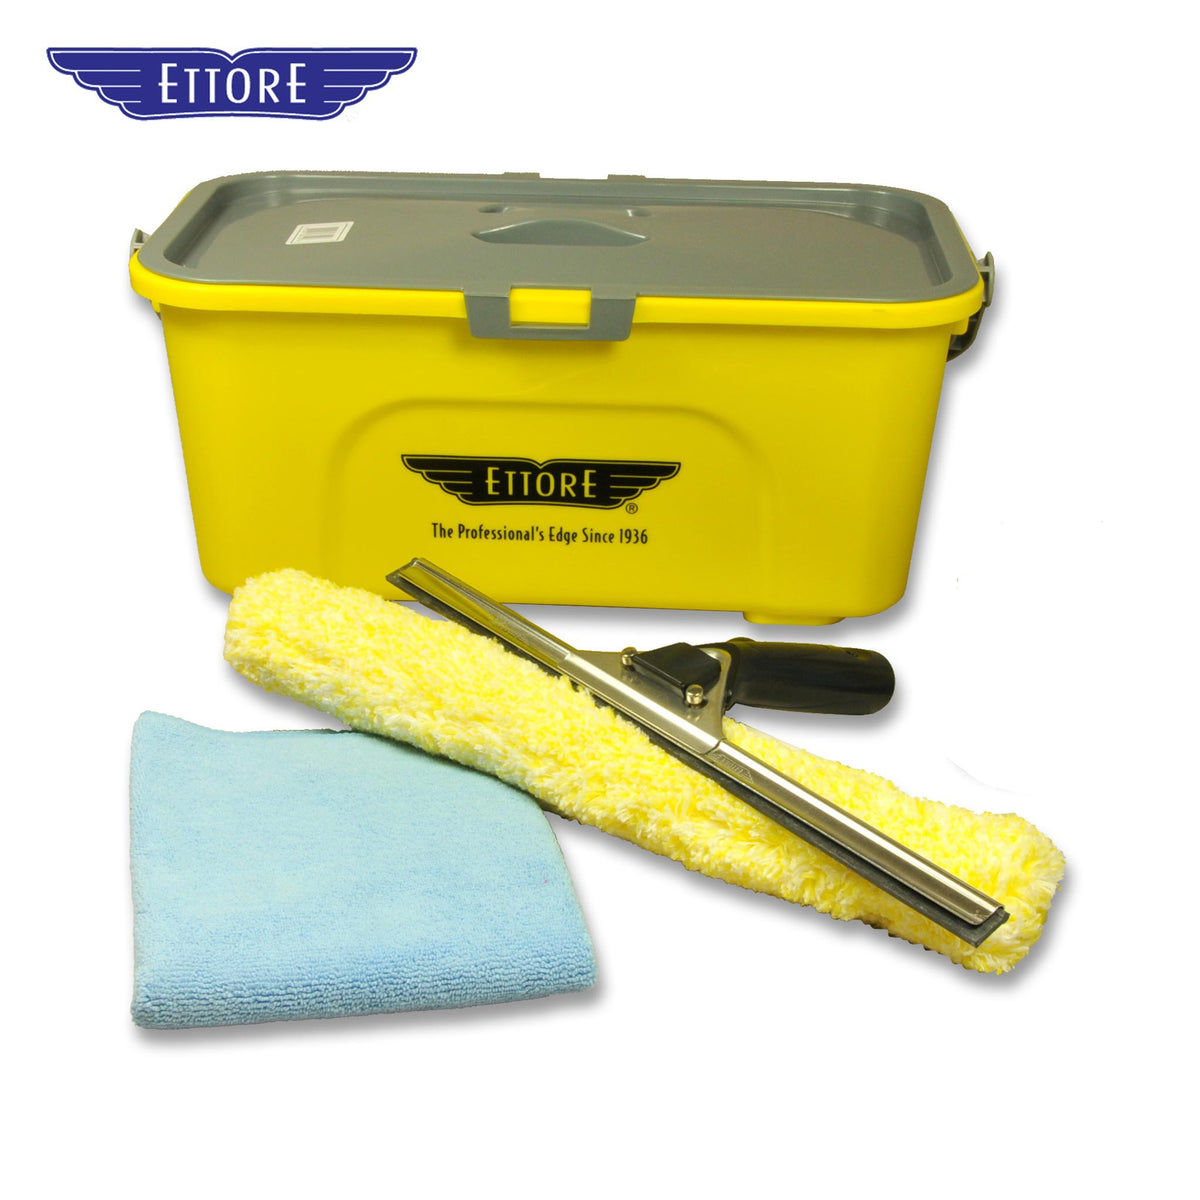 Ettore Starter Window Cleaning Kit, Starter Kits